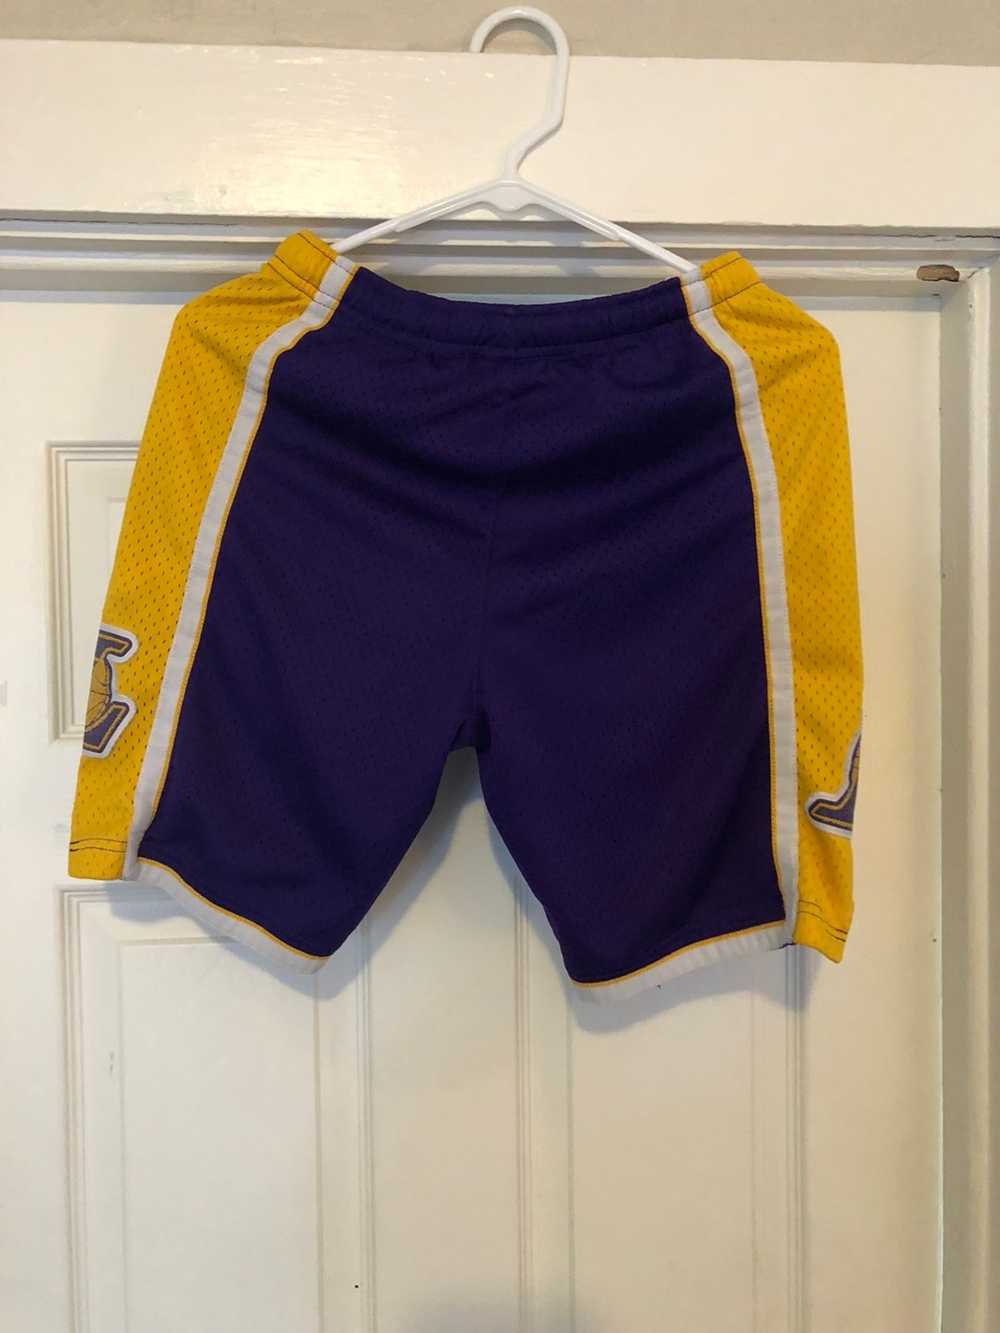 🚢 LA Lakers Jersey #93 Yellow  La lakers jersey, Mens shorts outfits, La  lakers